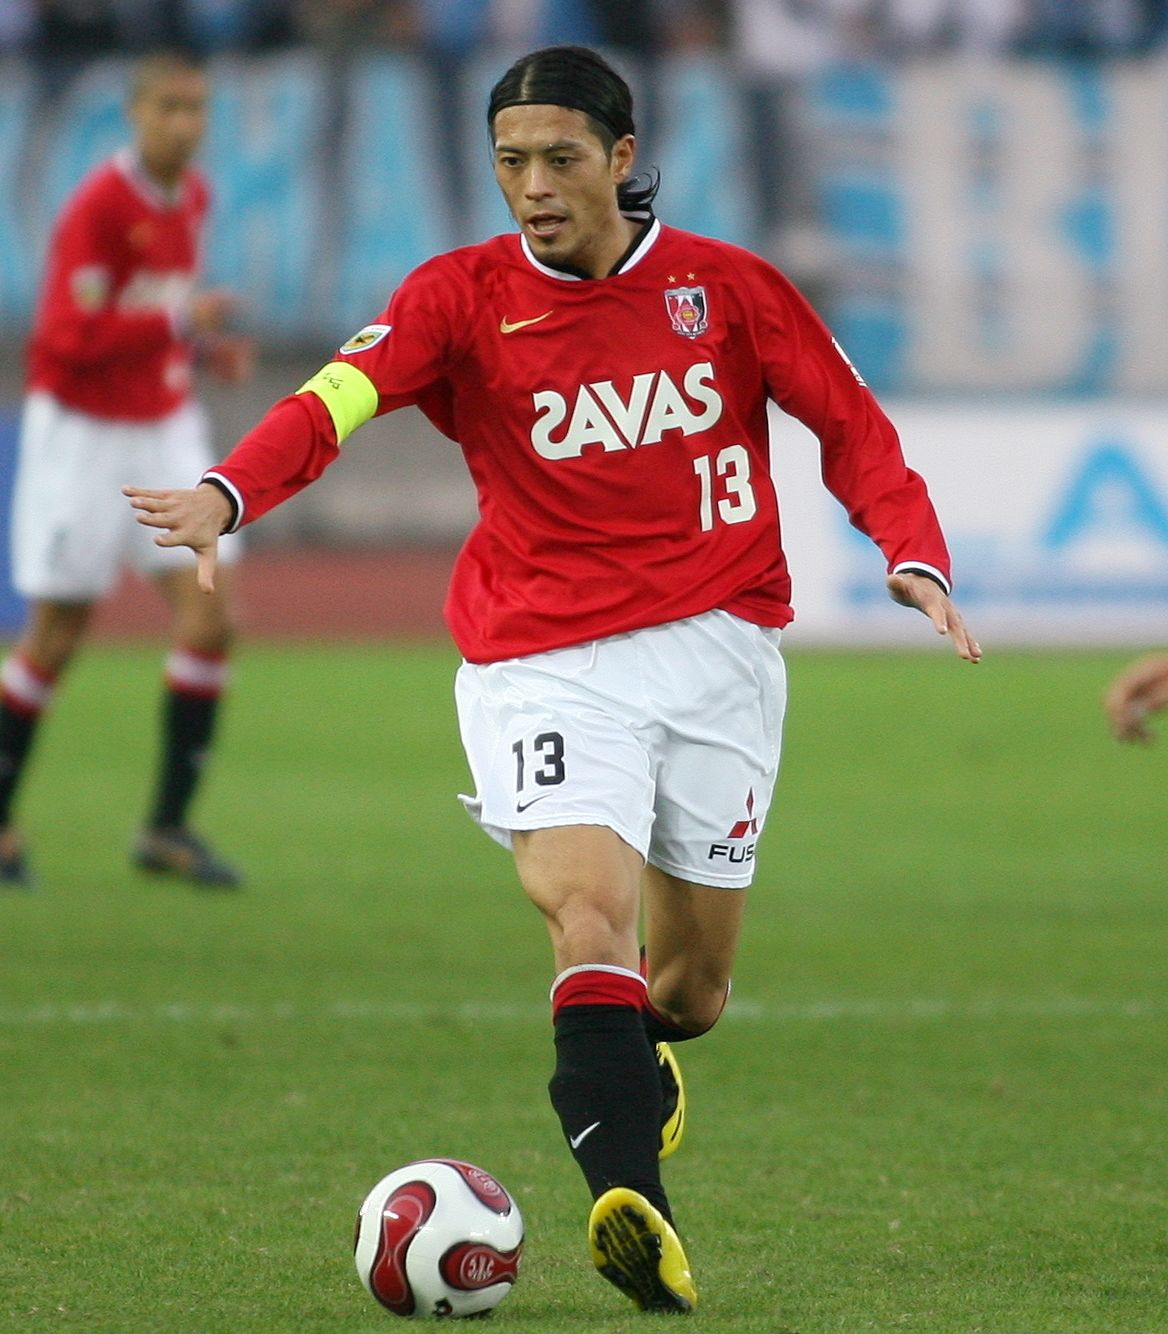 Suzuki Keita of the Urawa Reds in a soccer match against Yokohama FC at Nissan Stadium, Kanagawa Prefecture, on December 1, 2007. (© Jiji)